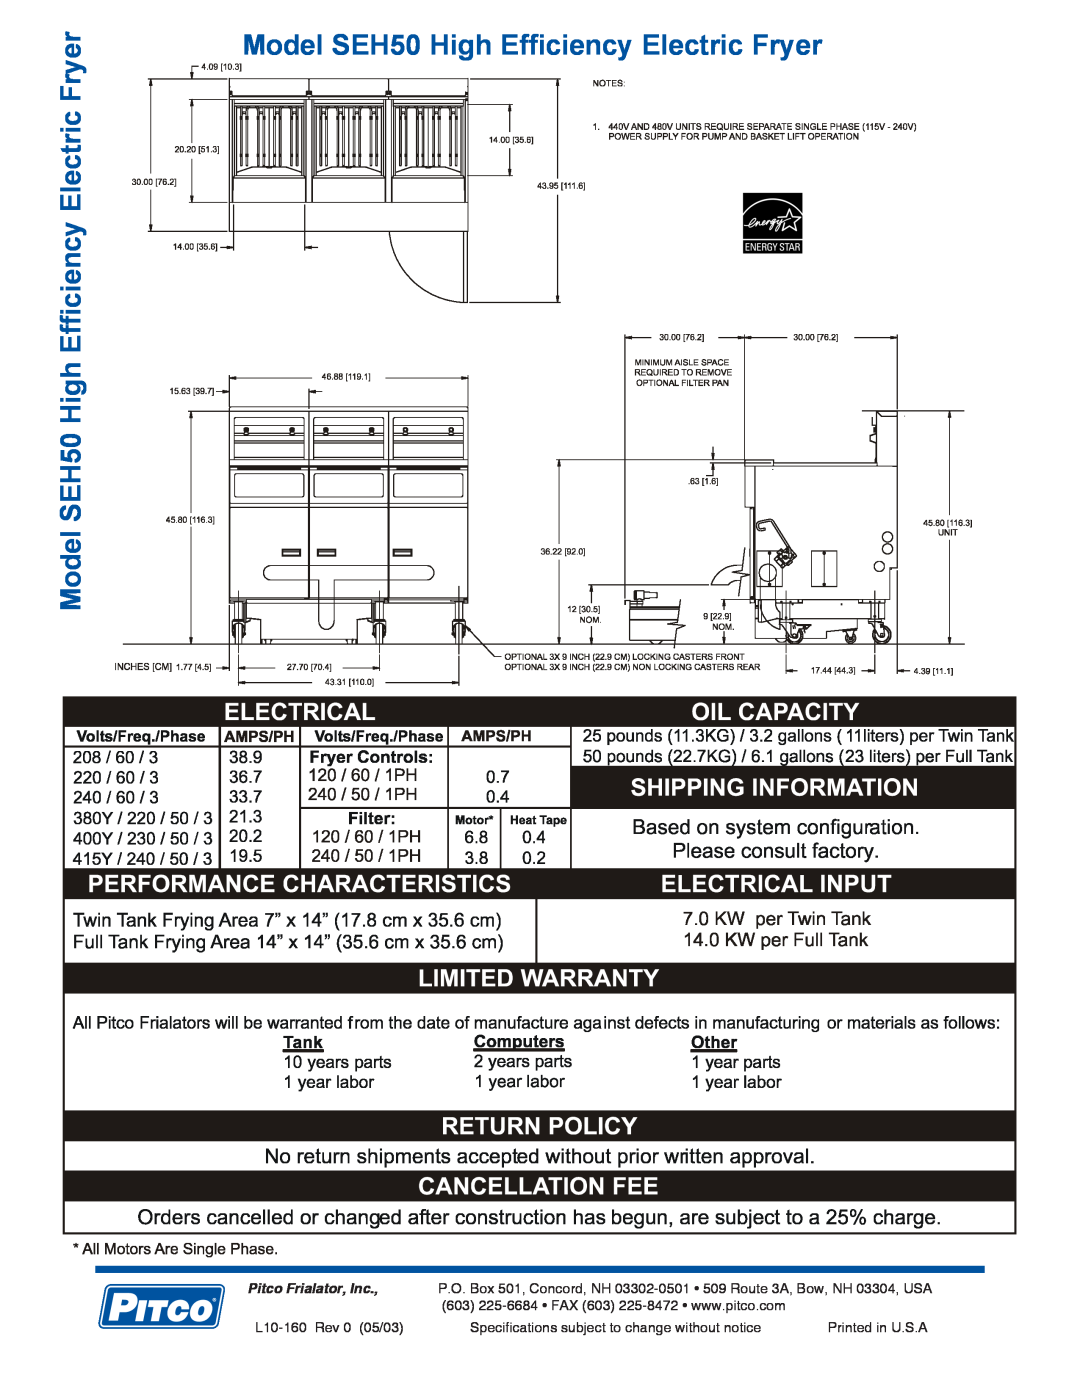 Pitco Frialator specifications Model SEH50 High Efficiency Electric Fryer, Pitco Frialator, Inc, L10-160Rev 0 05/03 